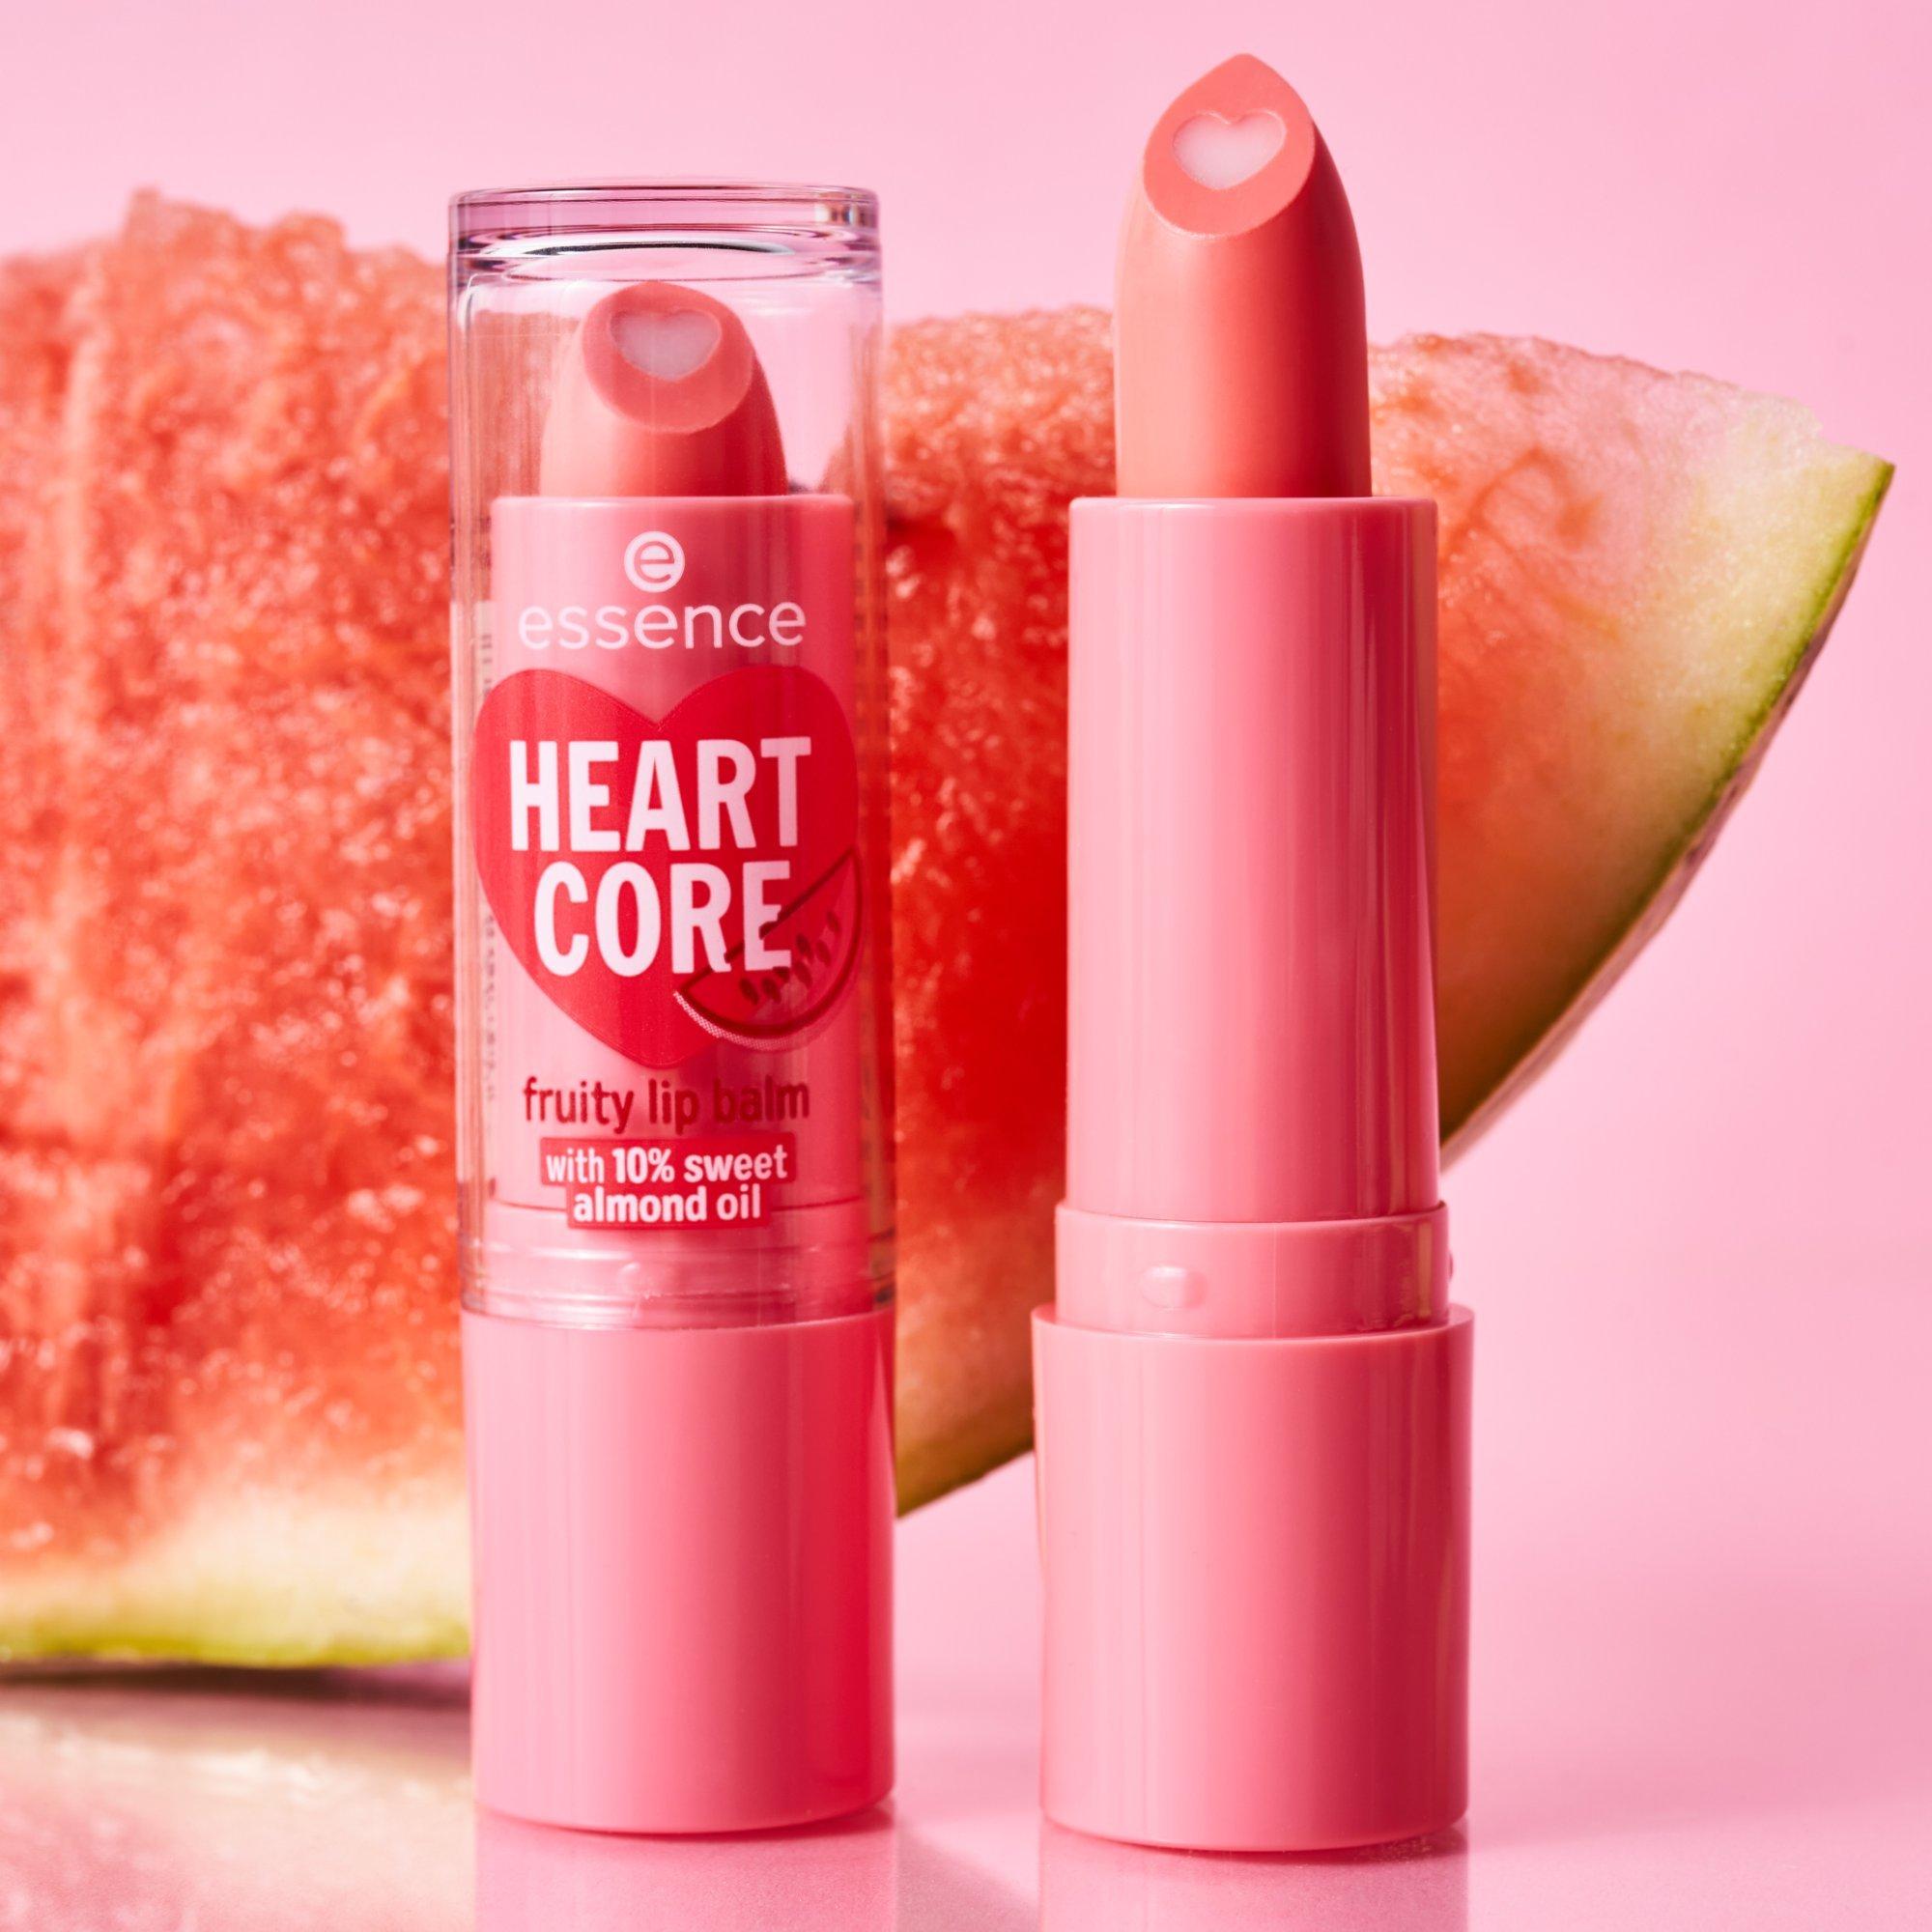 HEART CORE fruity lip balm